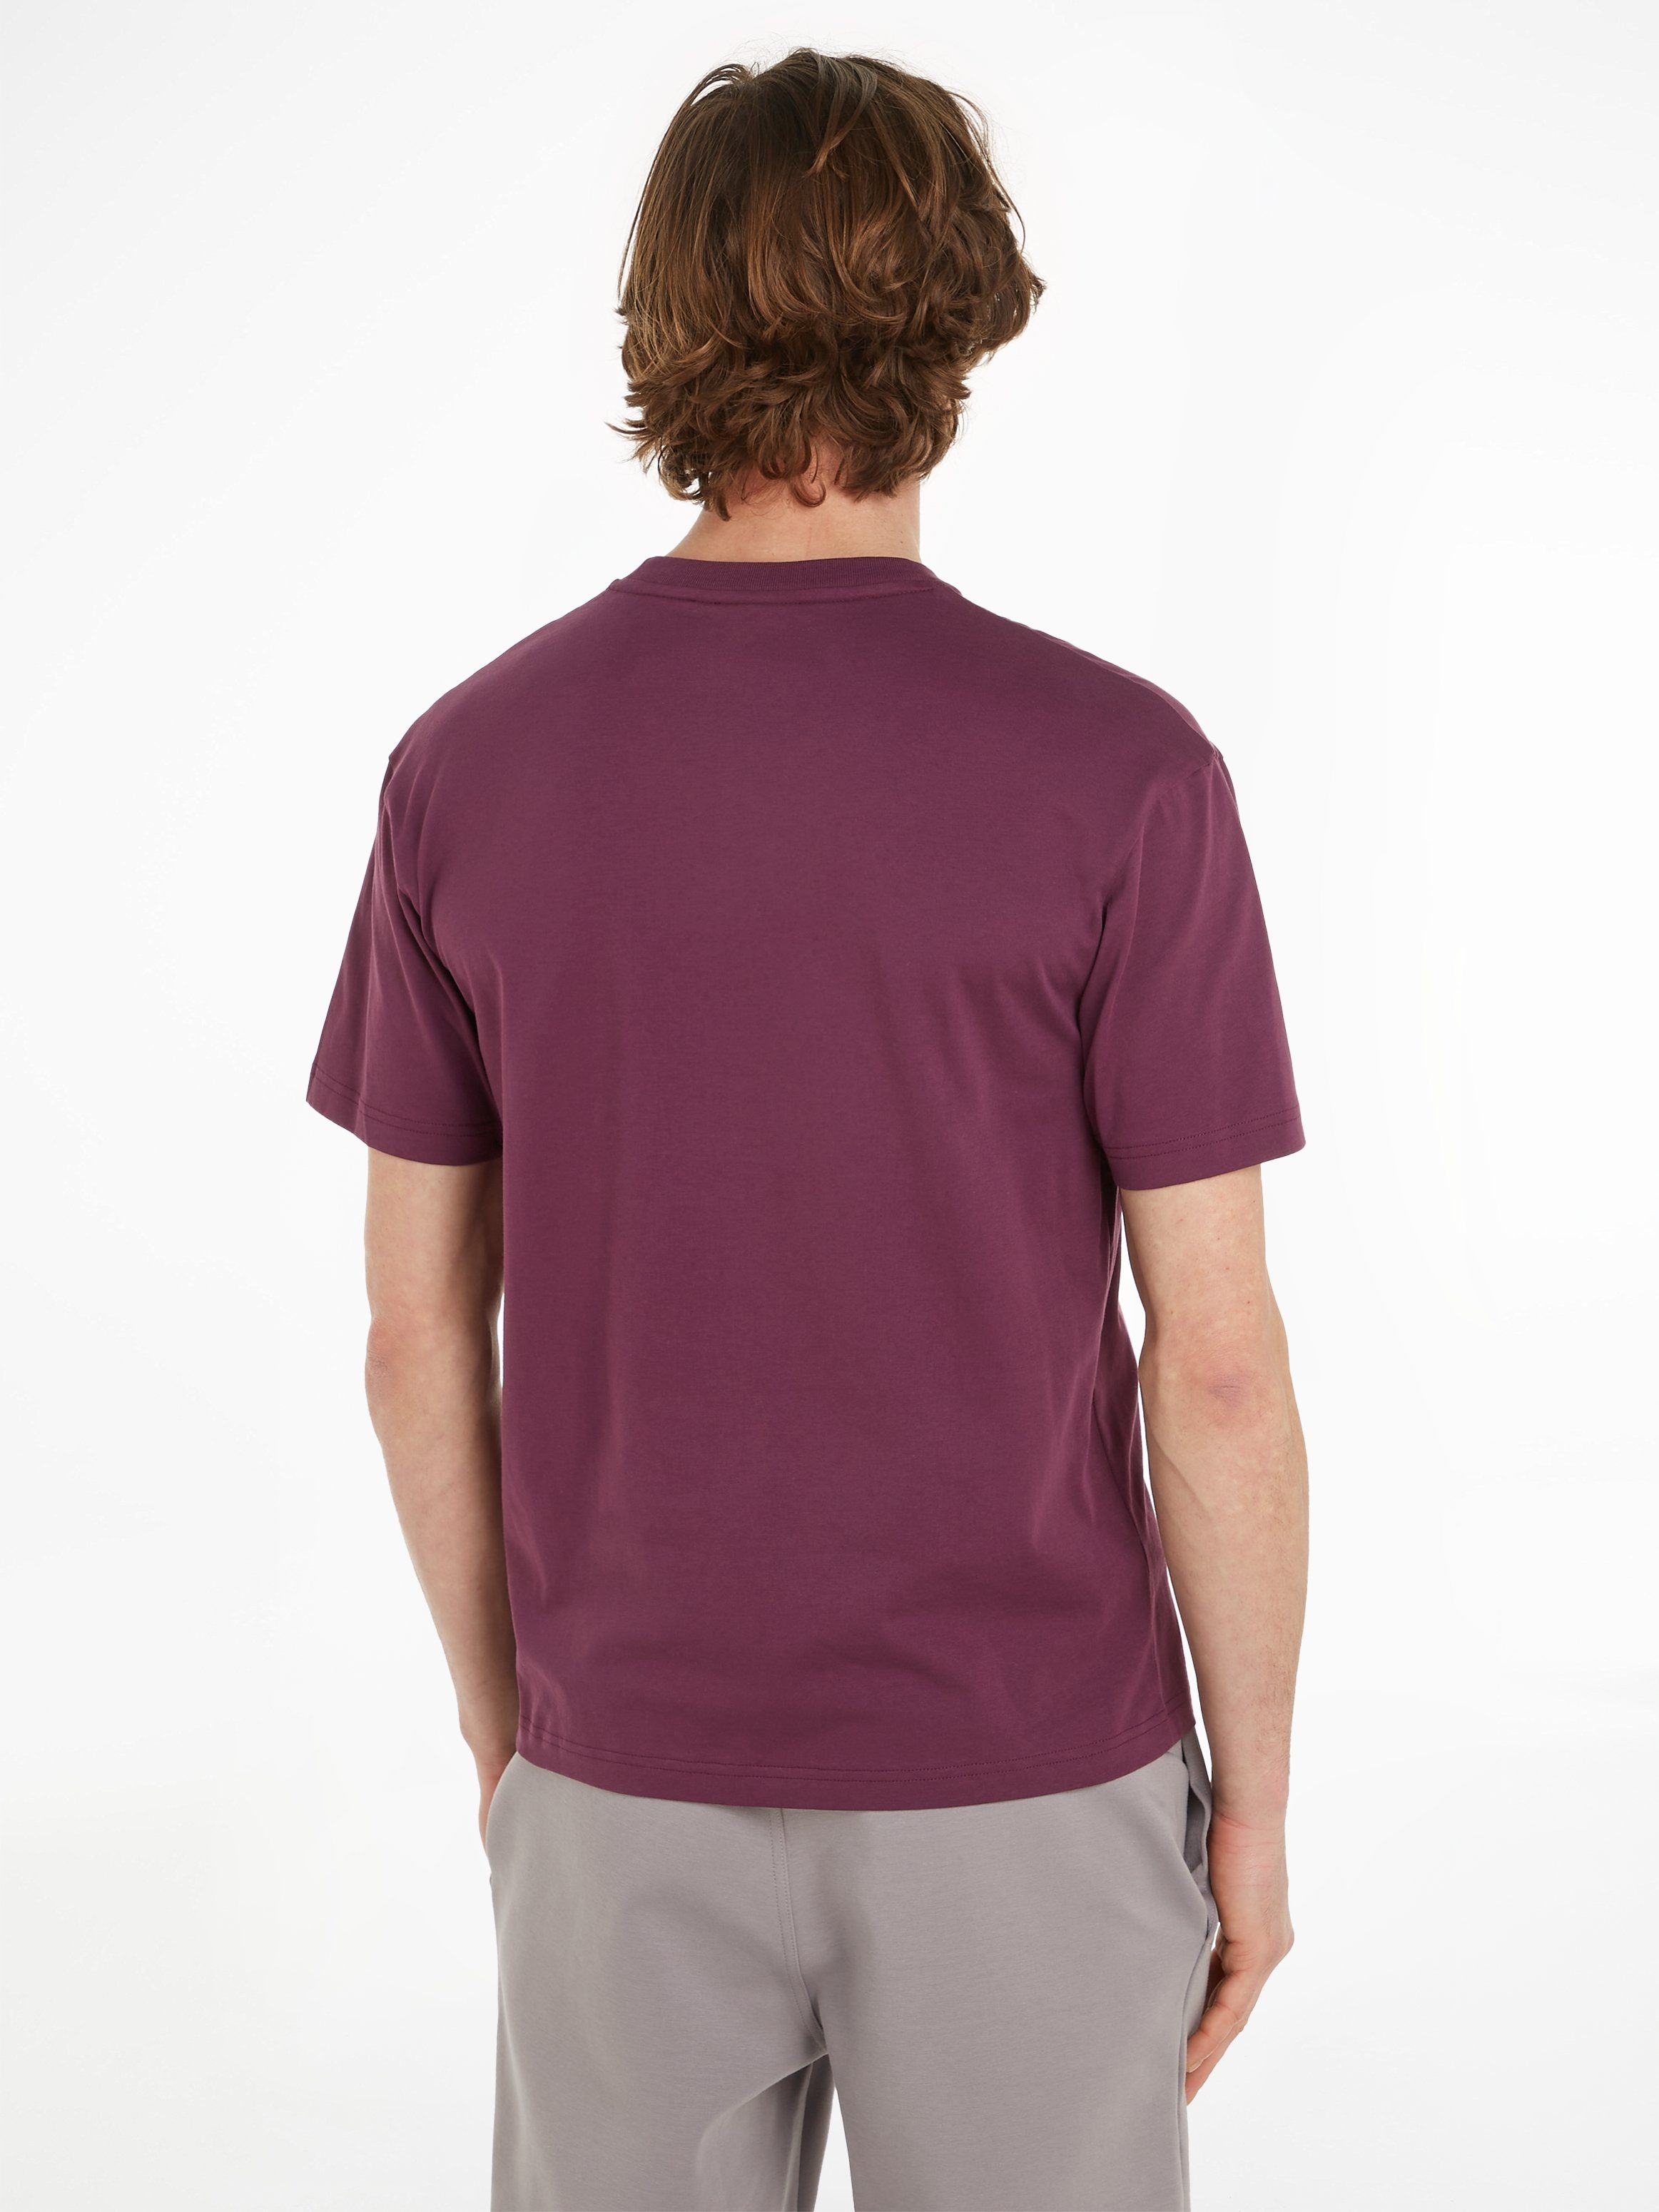 Calvin Klein T-Shirt Plum HERO COMFORT aufgedrucktem Italian T-SHIRT LOGO Markenlabel mit